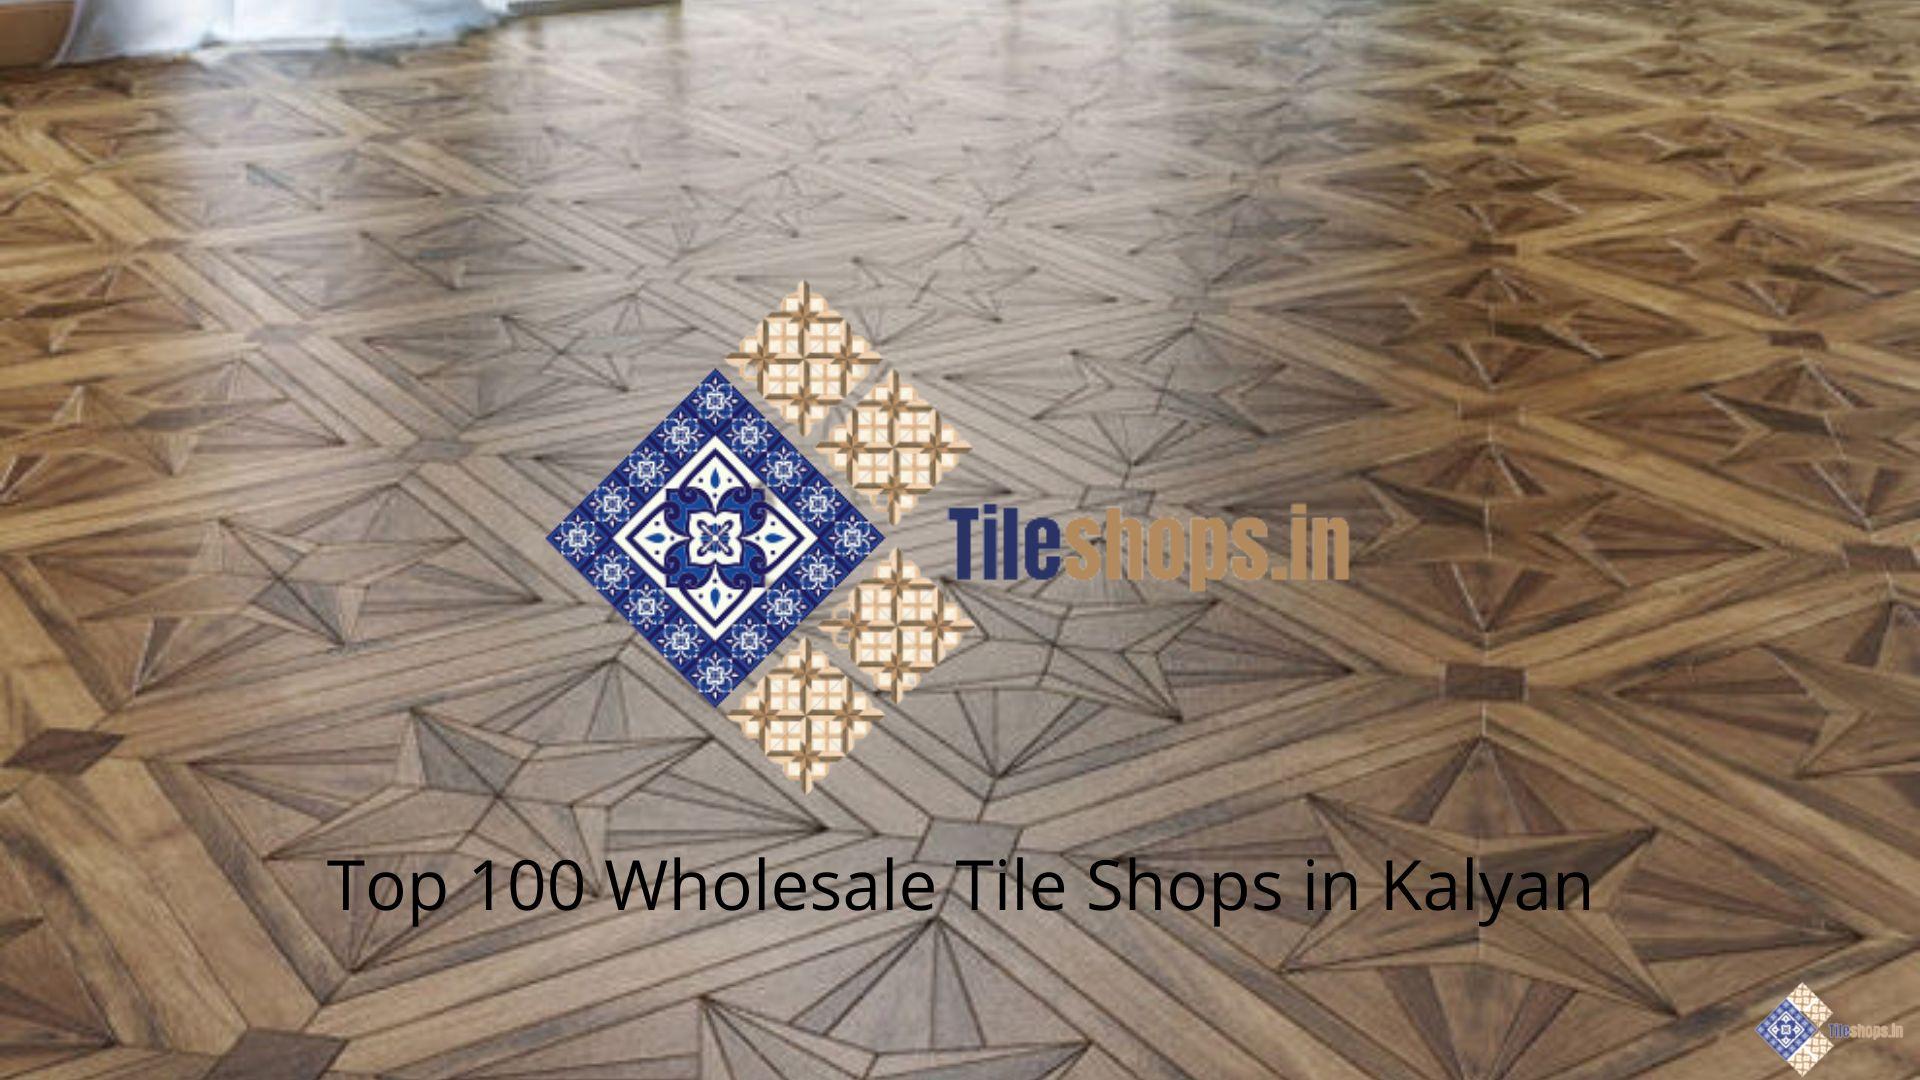 Top 100 Wholesale Tile Shops in Kalyan